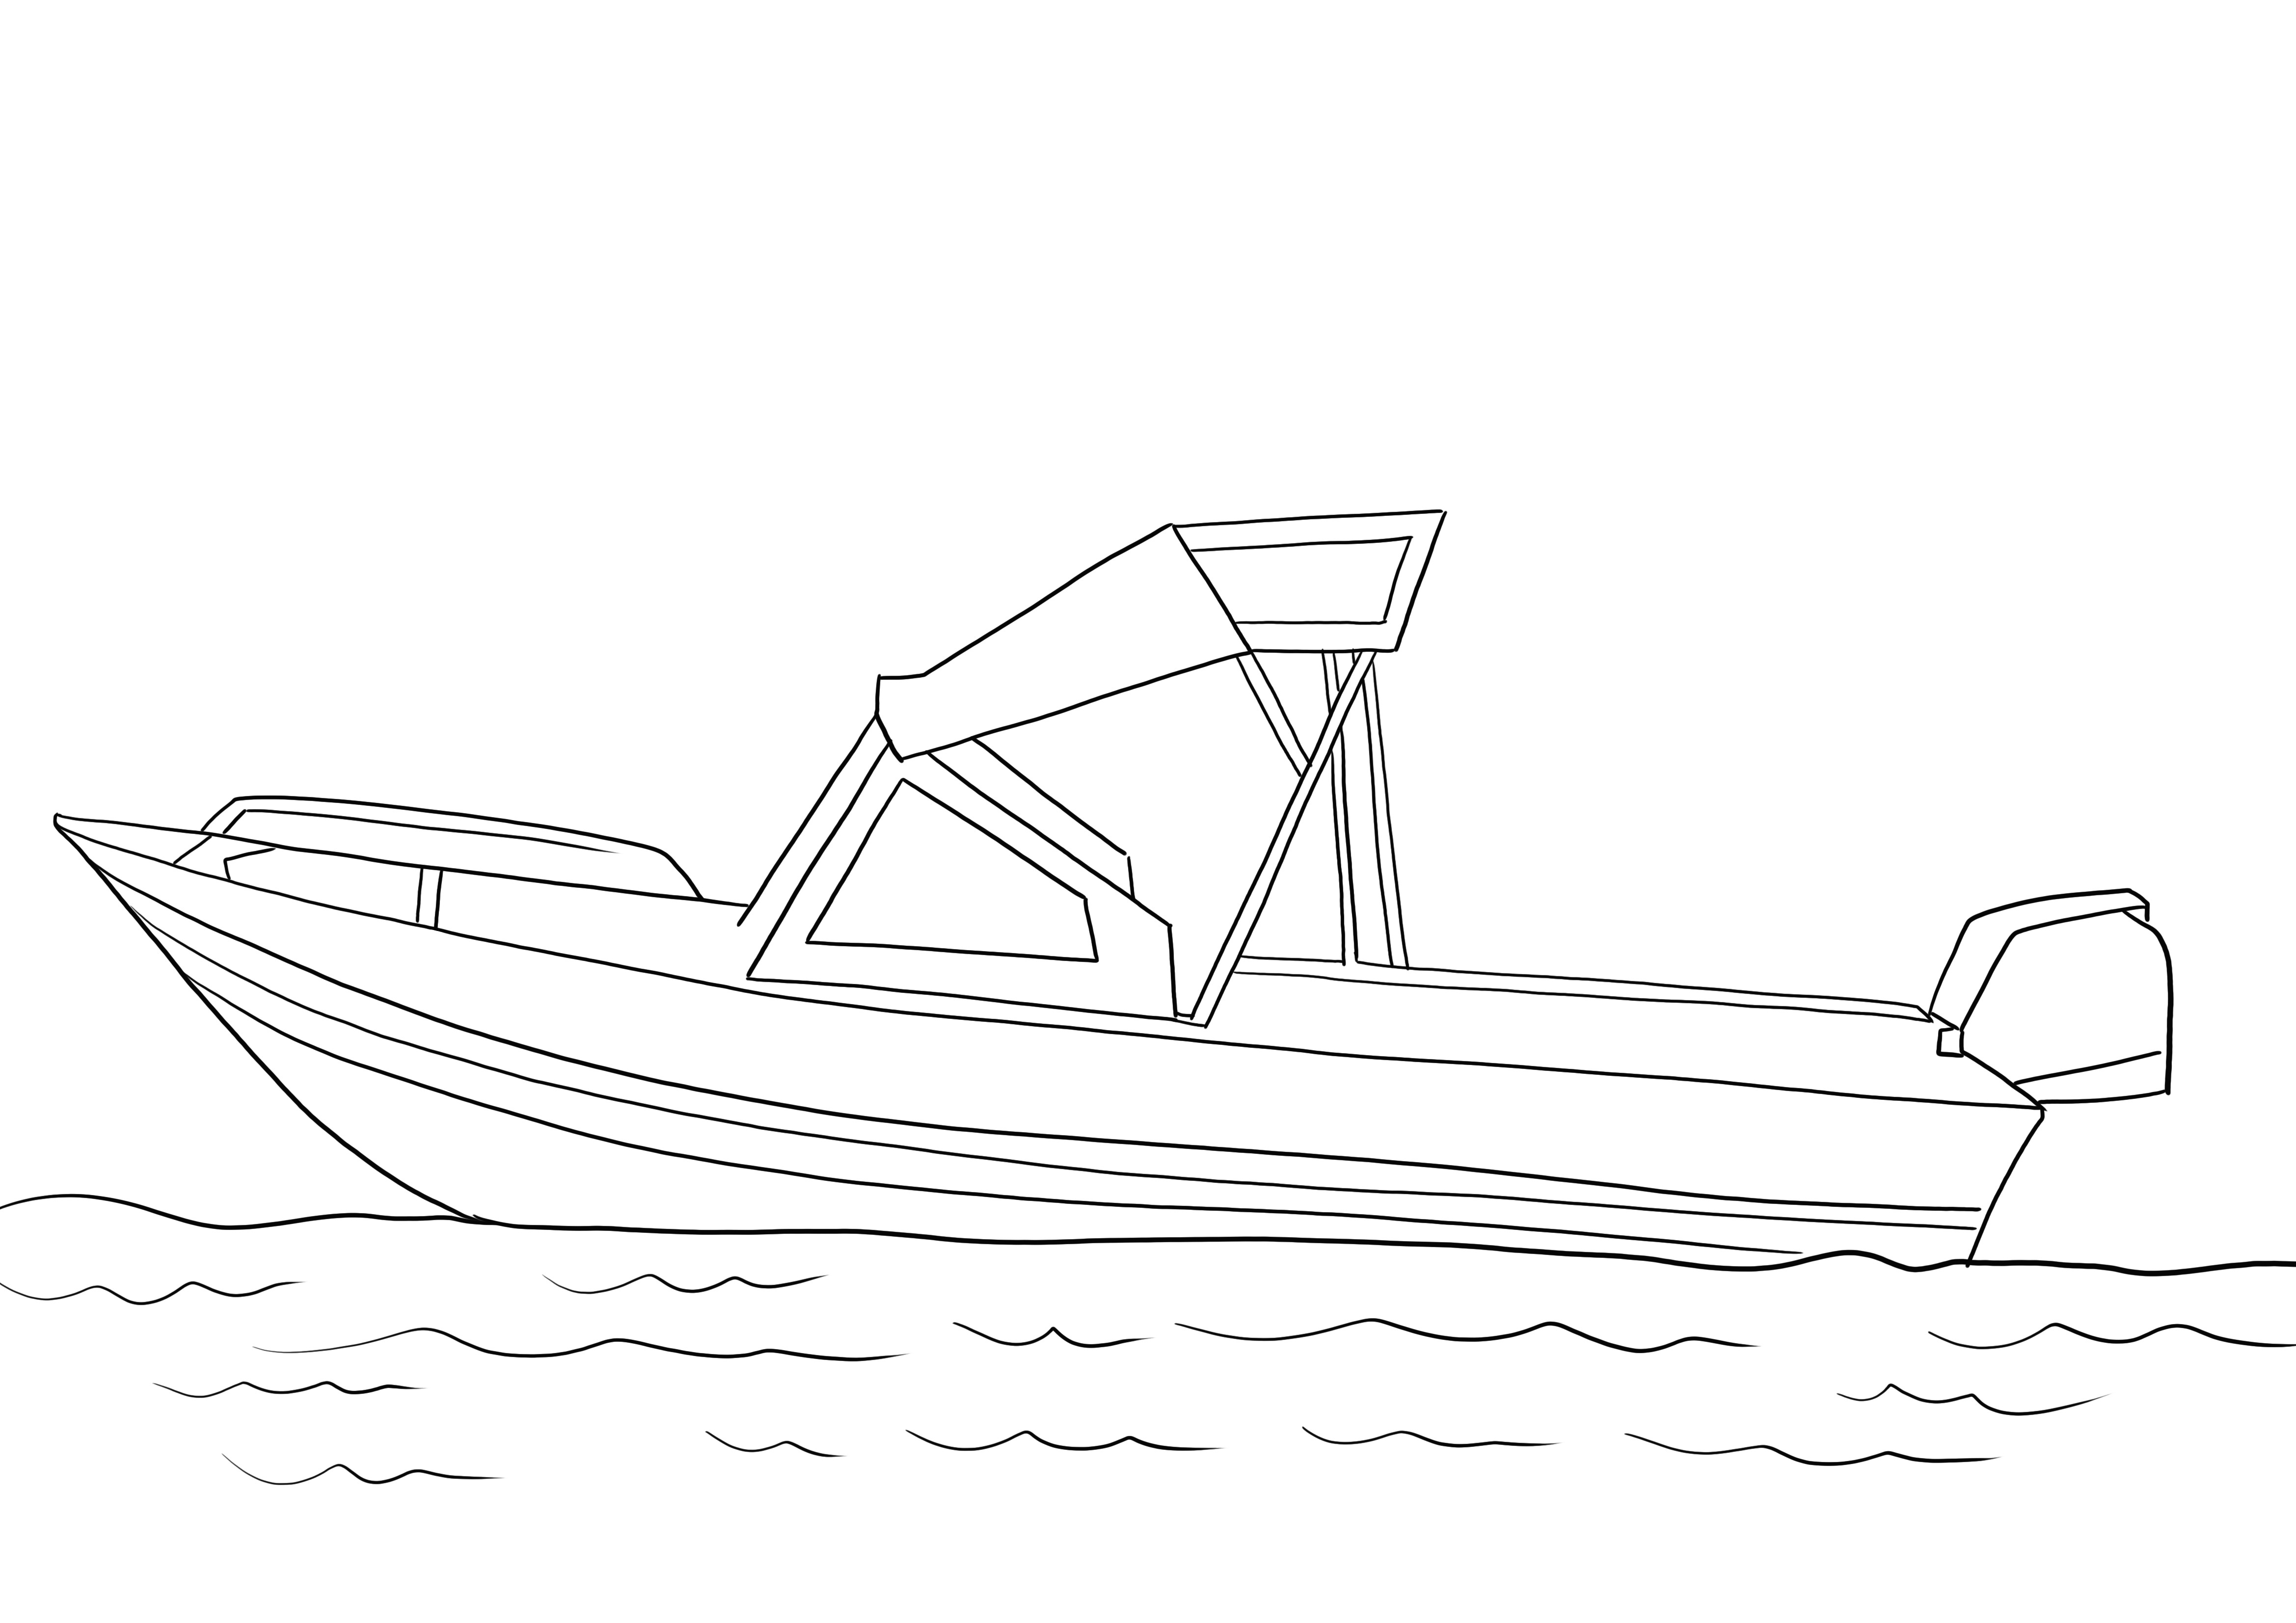 Dibujo de Barco de pesca gratis para colorear para imprimir o descargar fácilmente